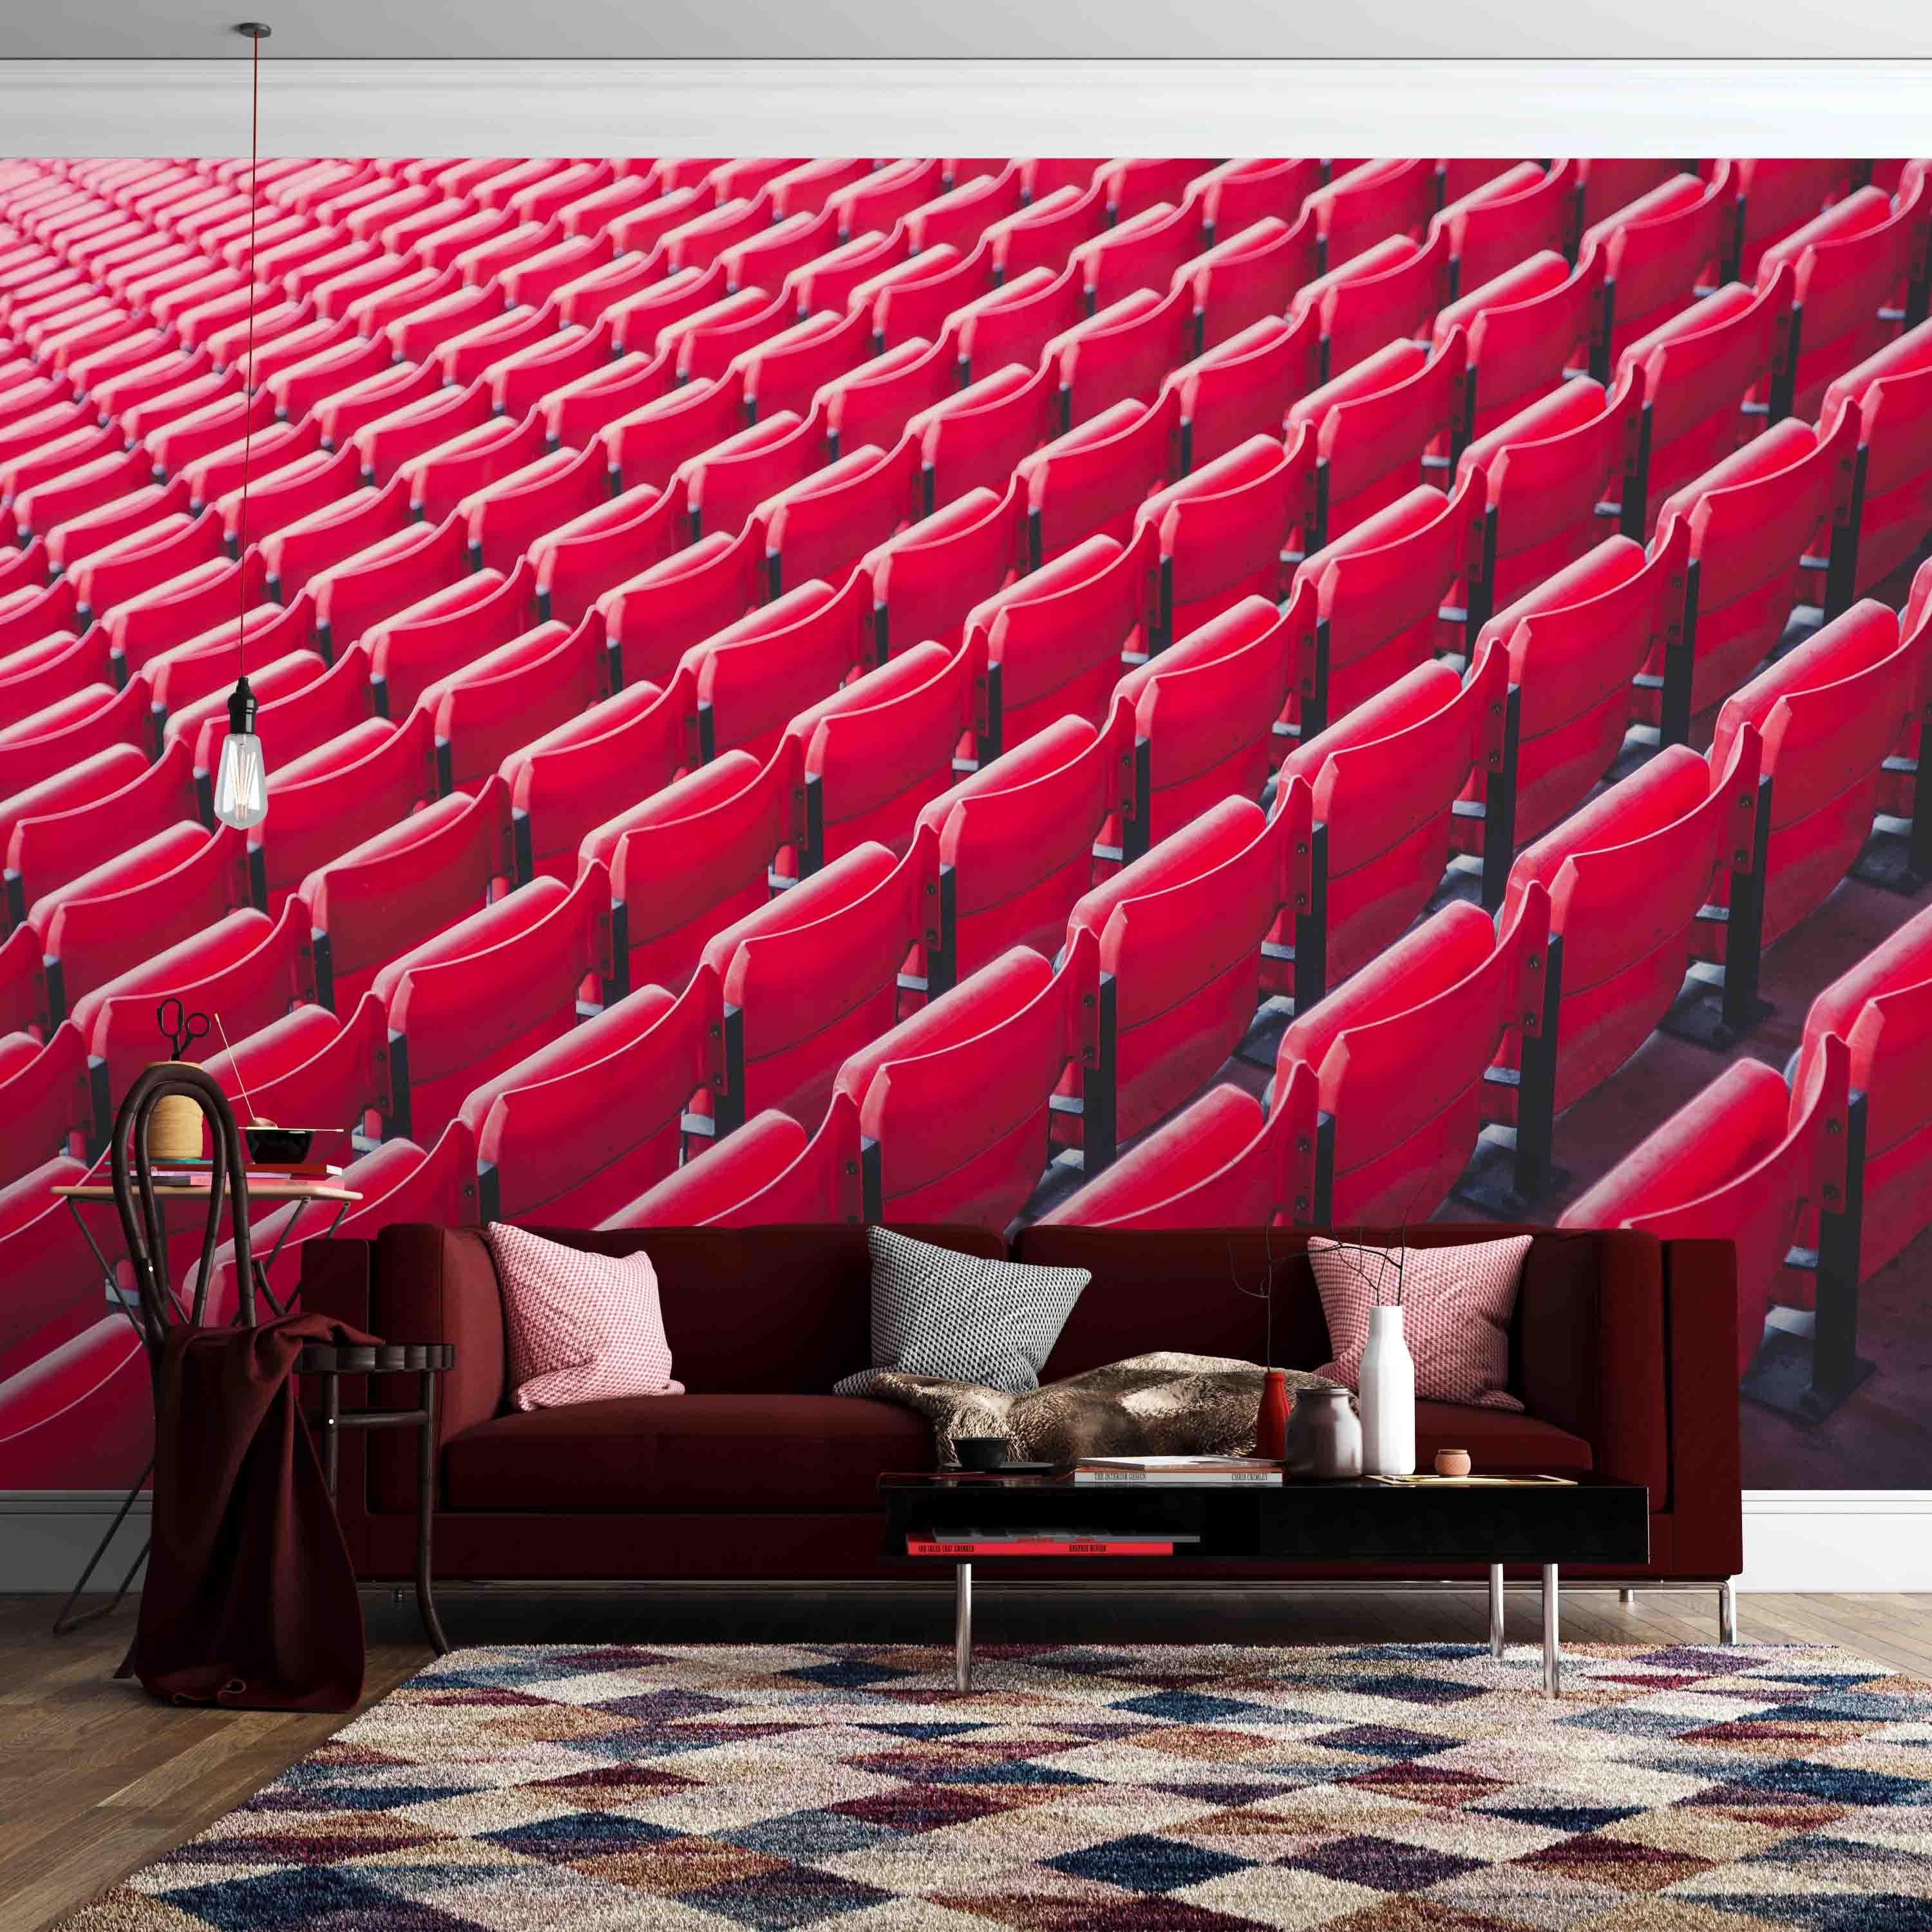 3D Red Auditorium Seat Wall Mural Wallpaper SF01- Jess Art Decoration